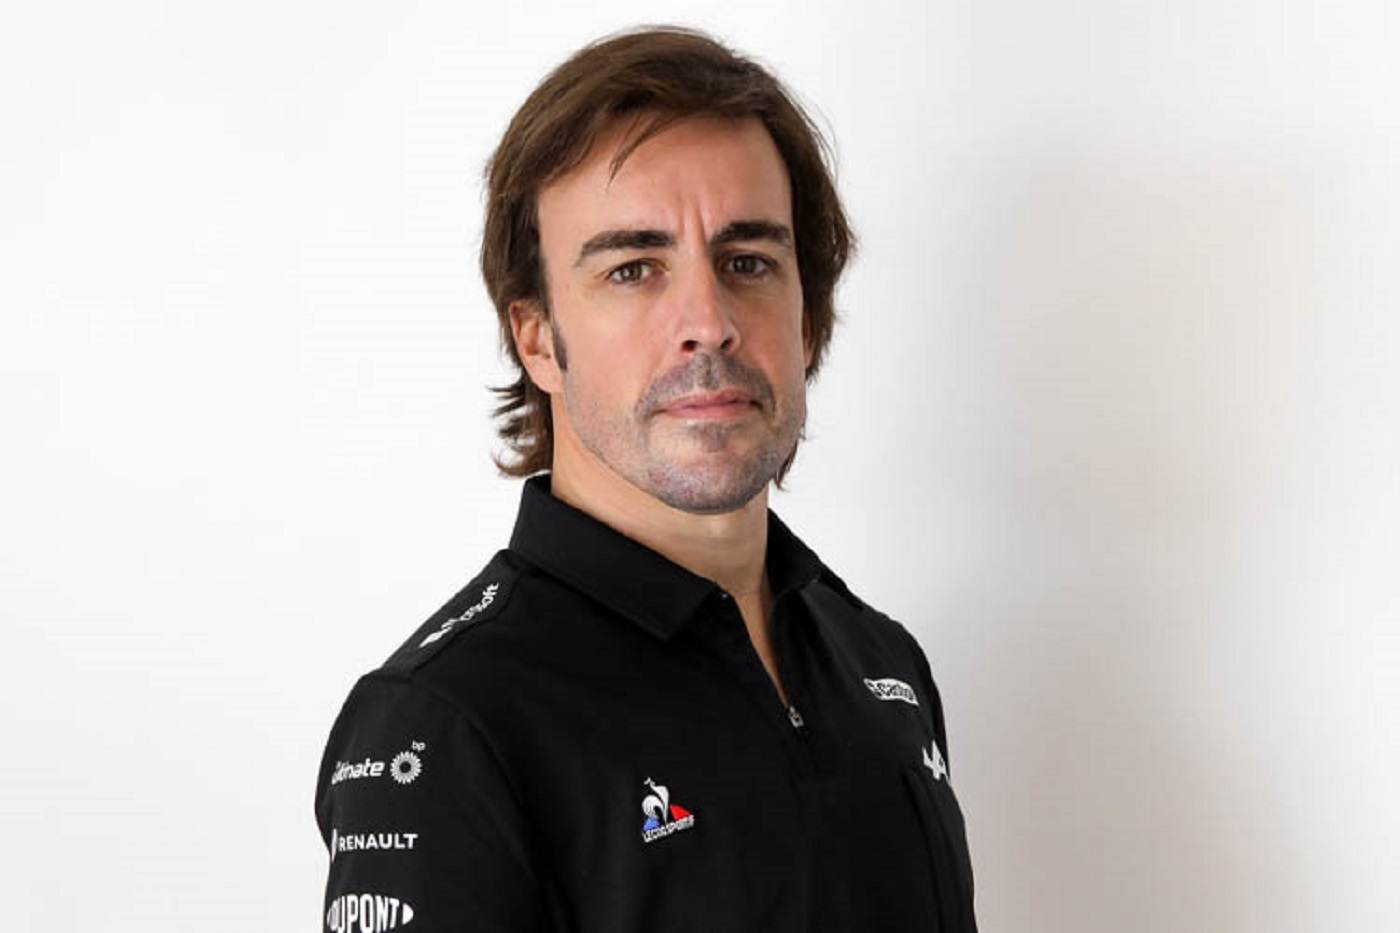 Ropa: Fernando Alonso